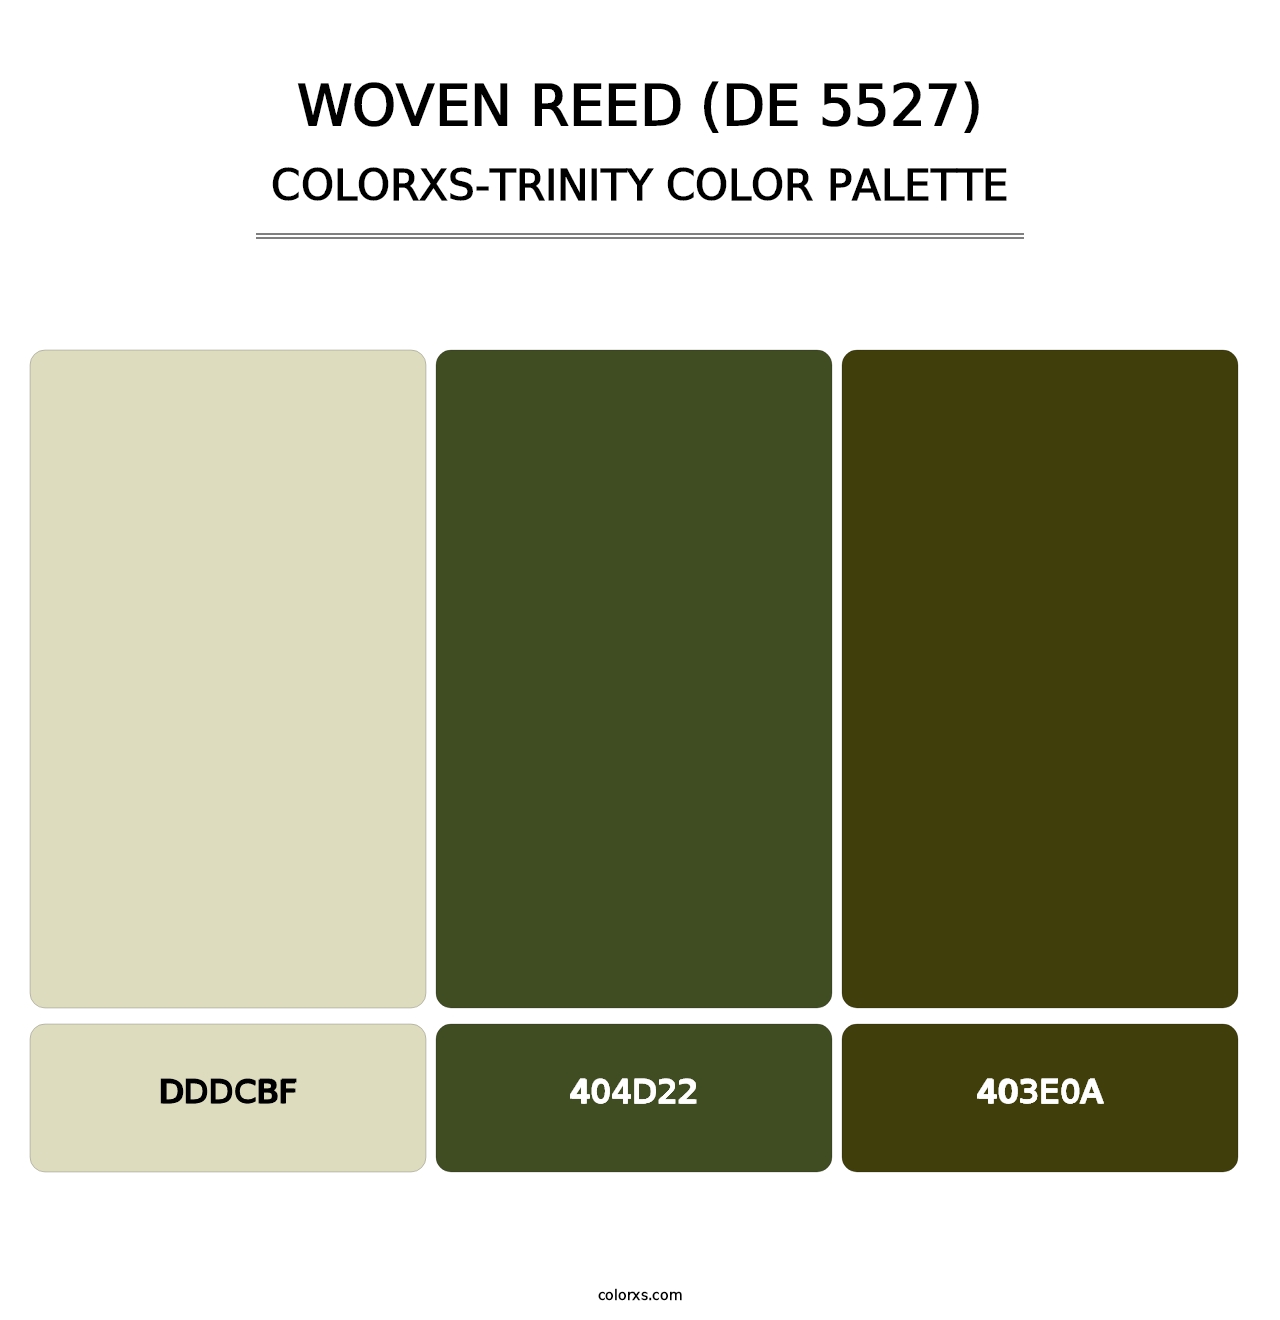 Woven Reed (DE 5527) - Colorxs Trinity Palette